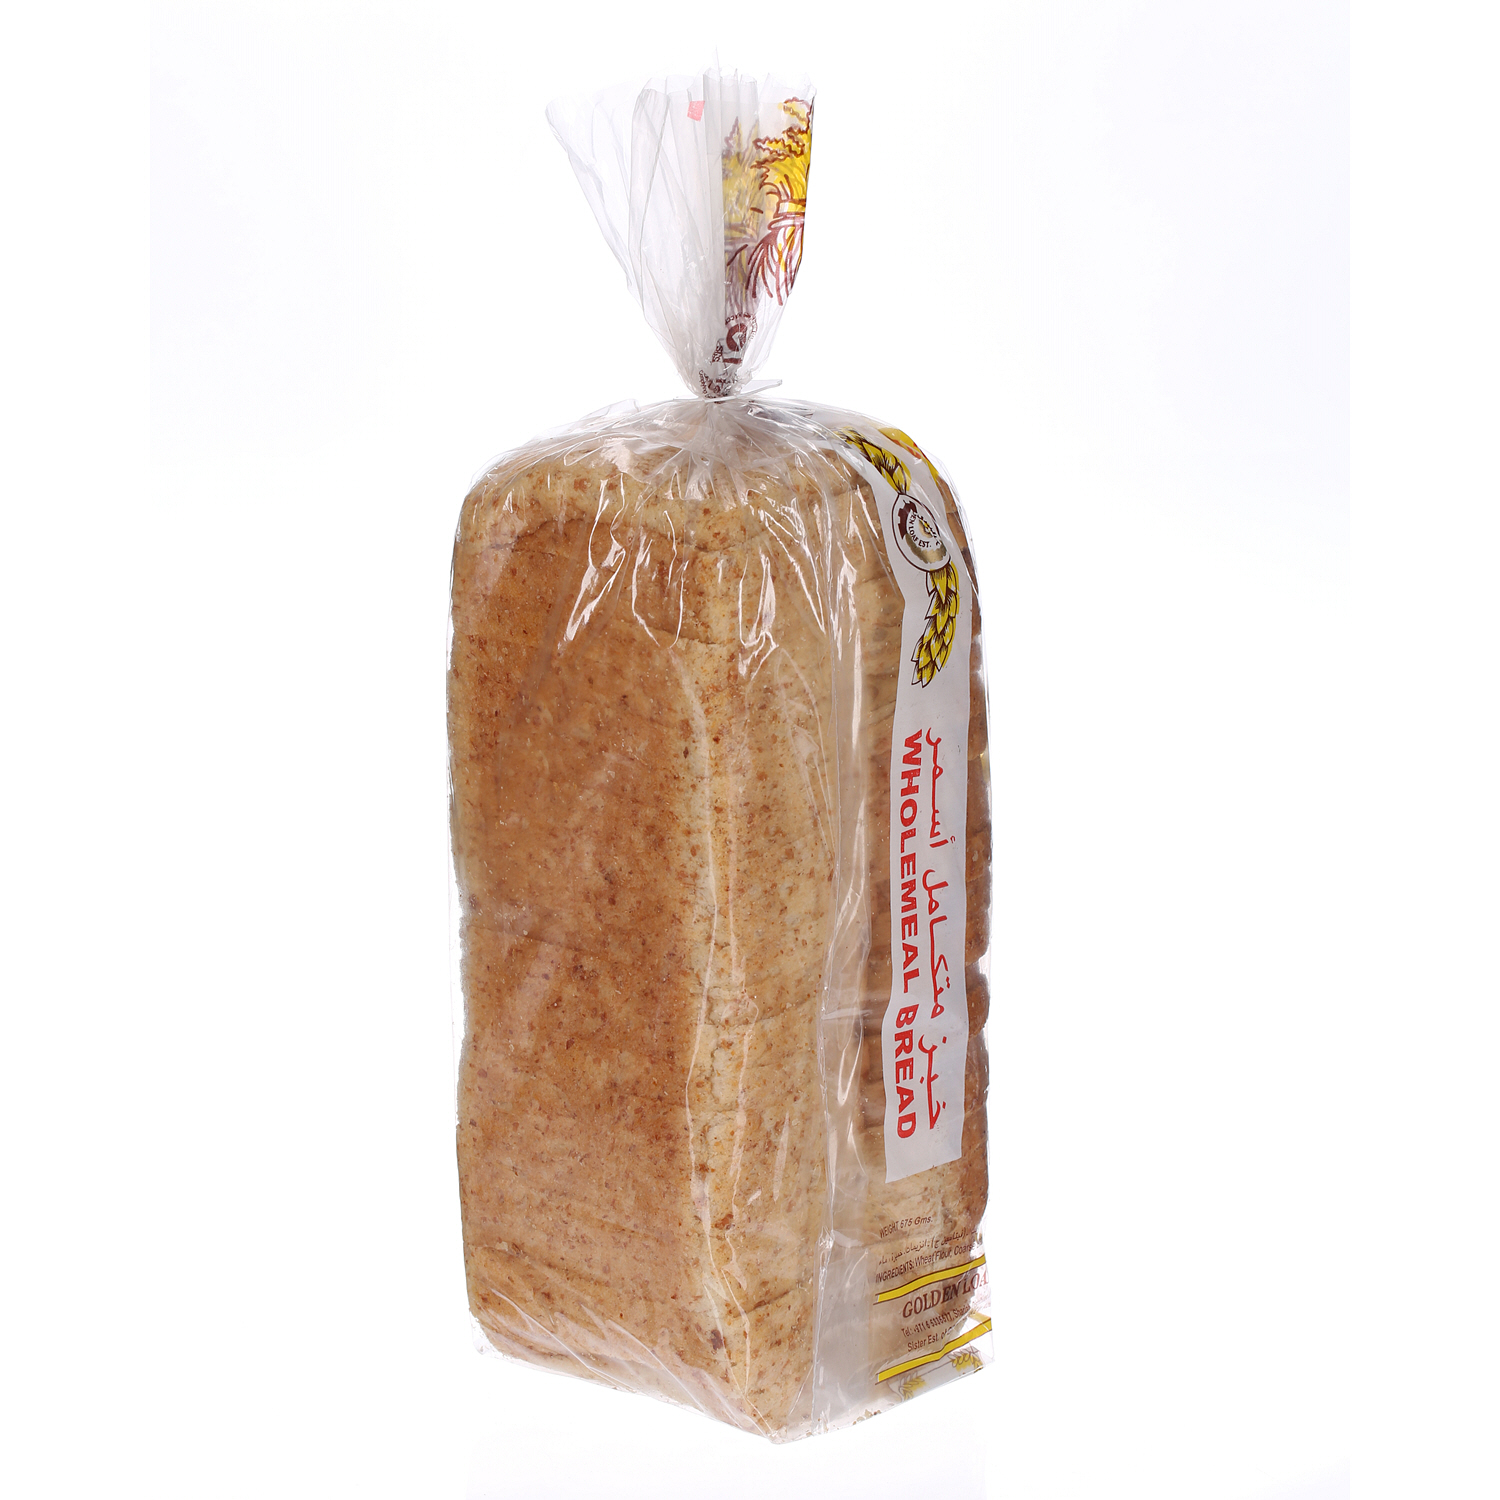 Golden Loaf Bread Whole Meal